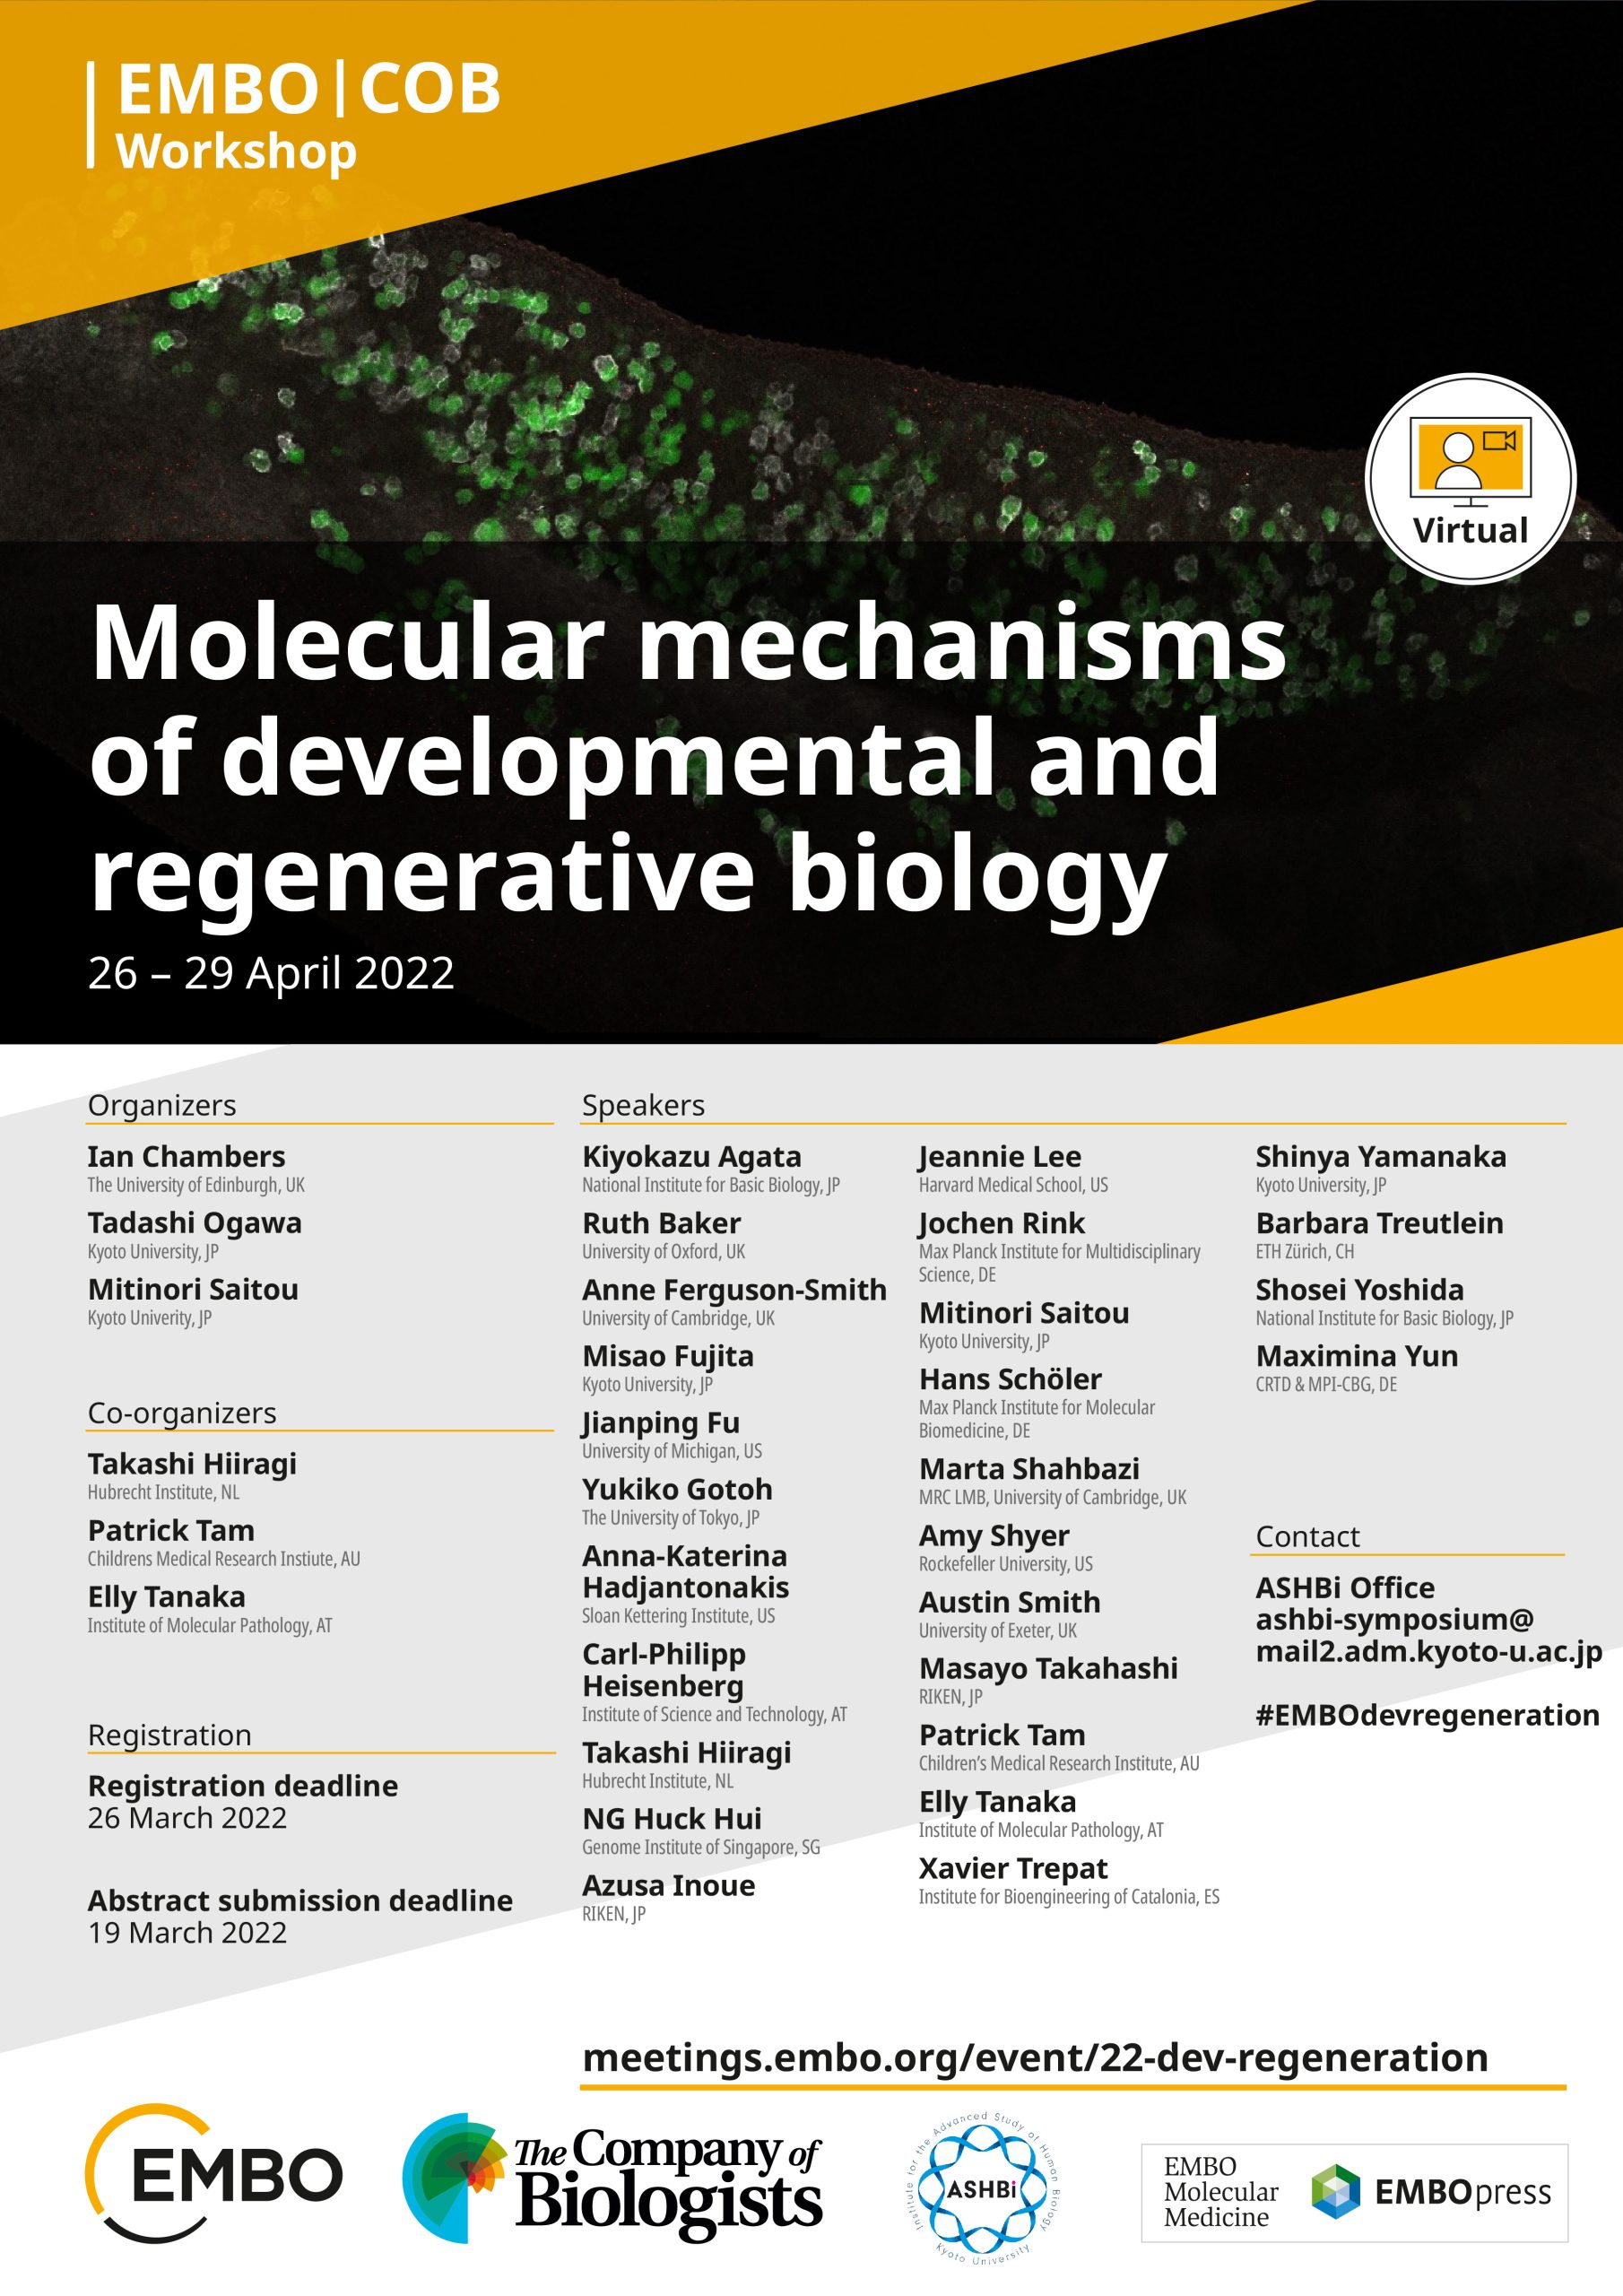 [Event Report] EMBO | The Company of Biologists Workshop: Molecular mechanisms of developmental and regenerative biology